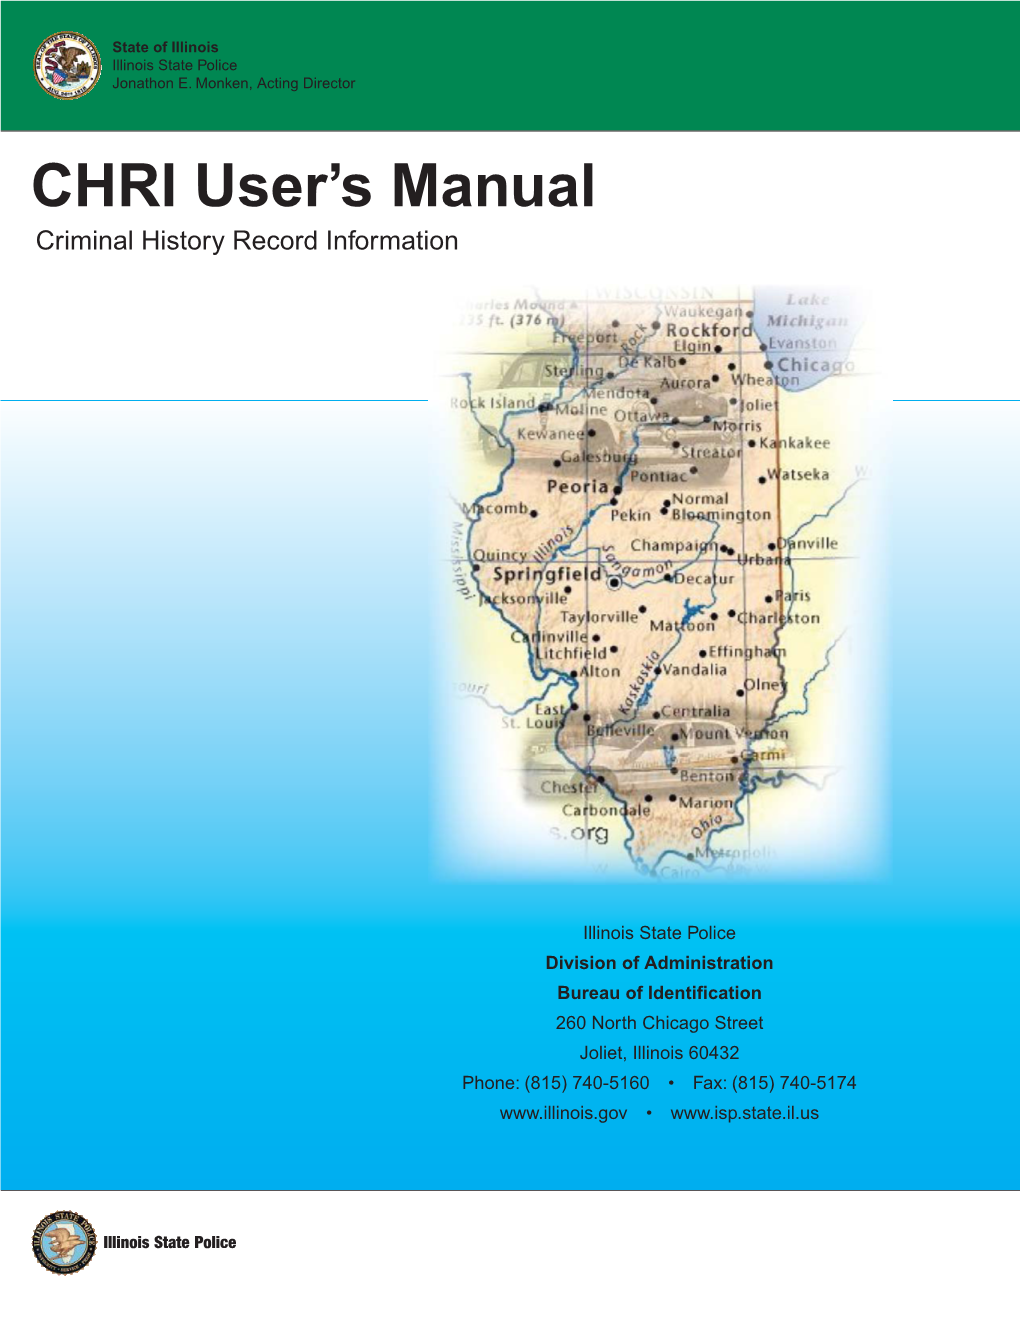 CHRI User's Manual